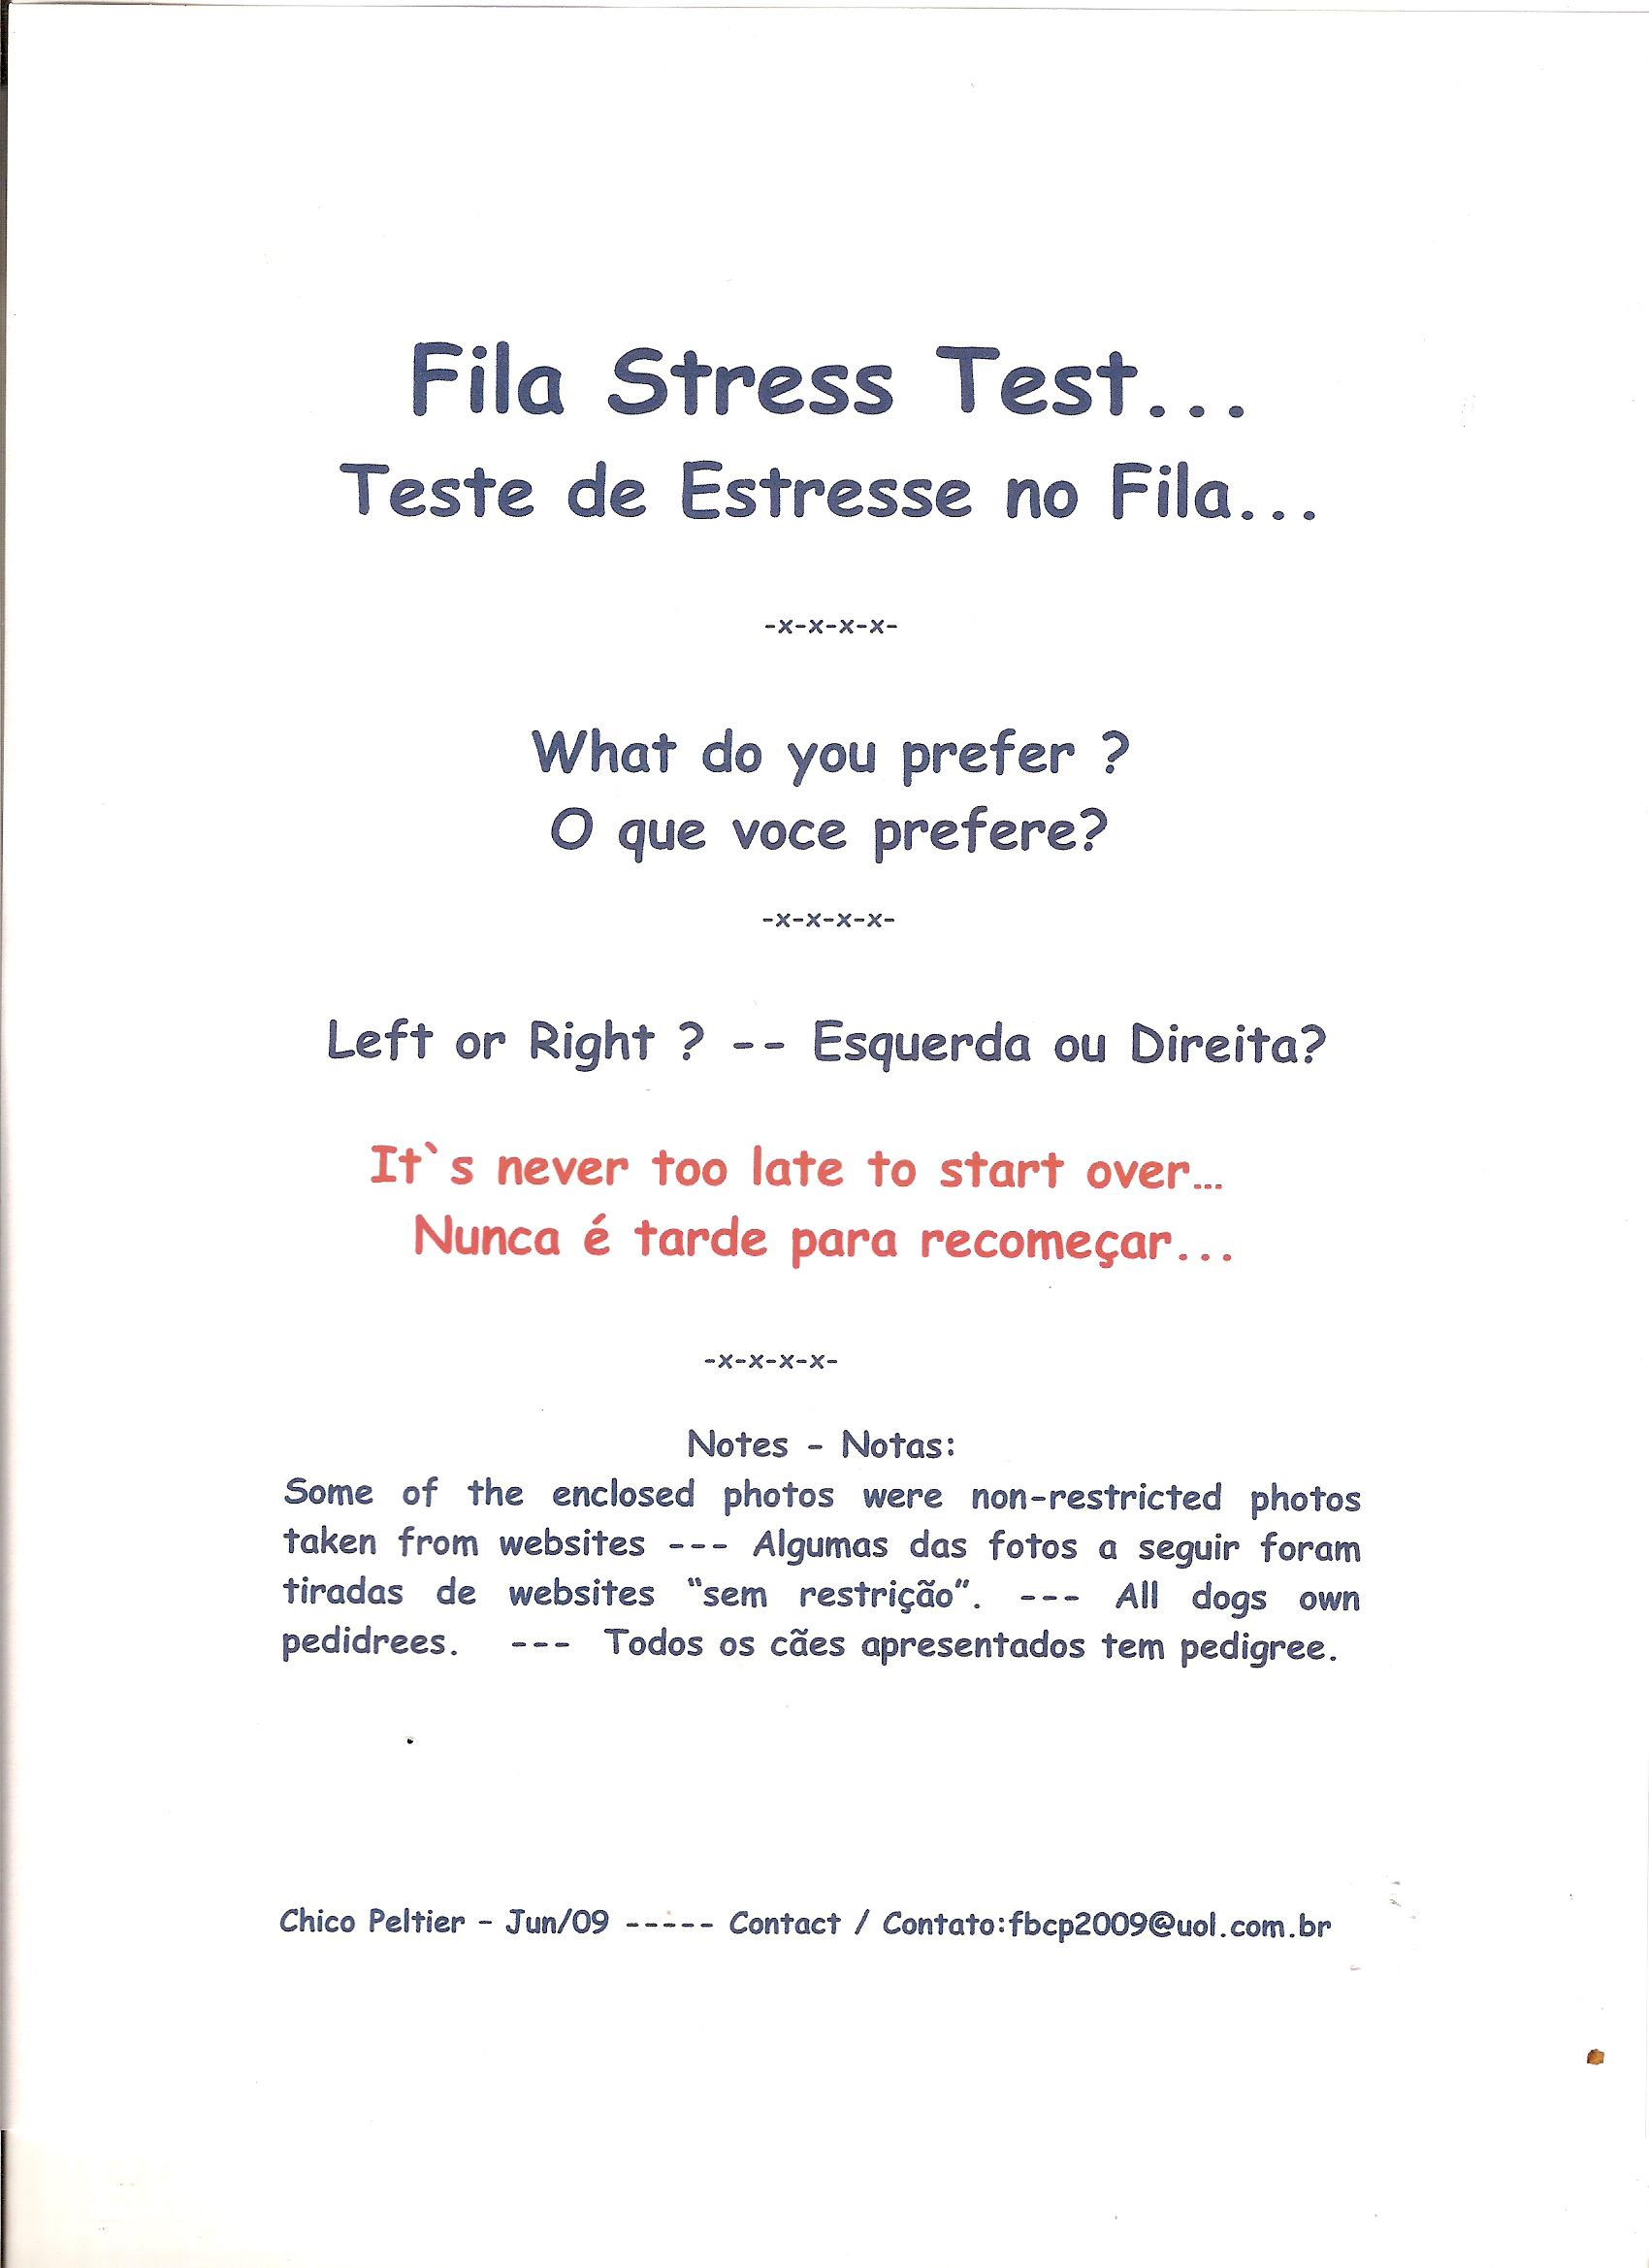  - Fila Stress Test page 001